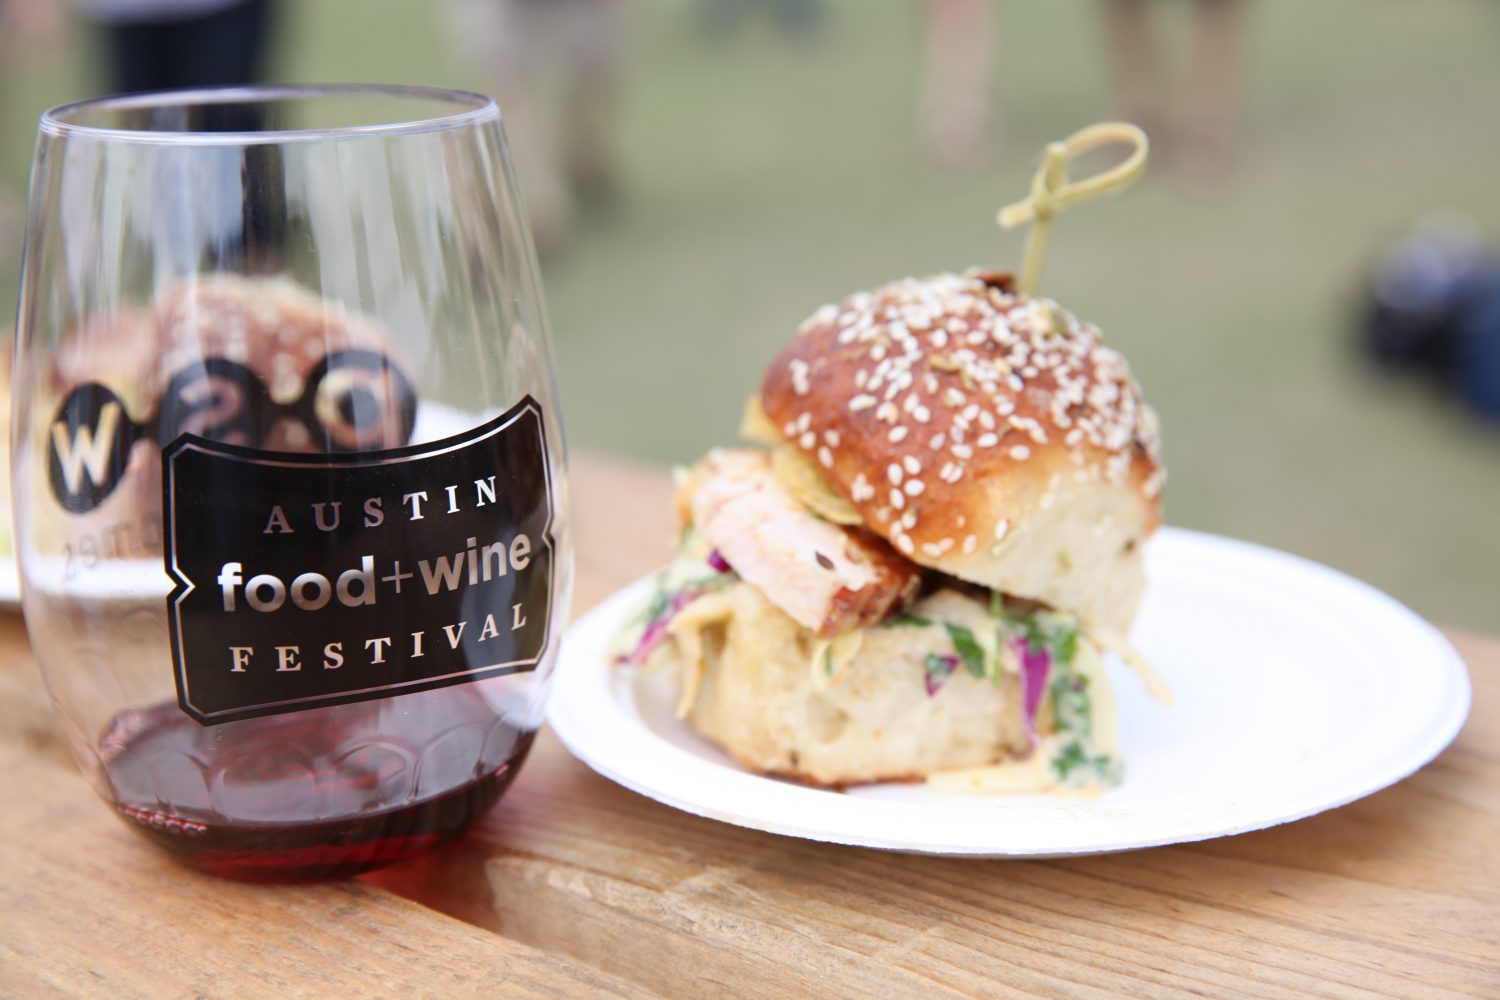 Austin Food + Wine Festival Announces Artisans at The Grand Taste